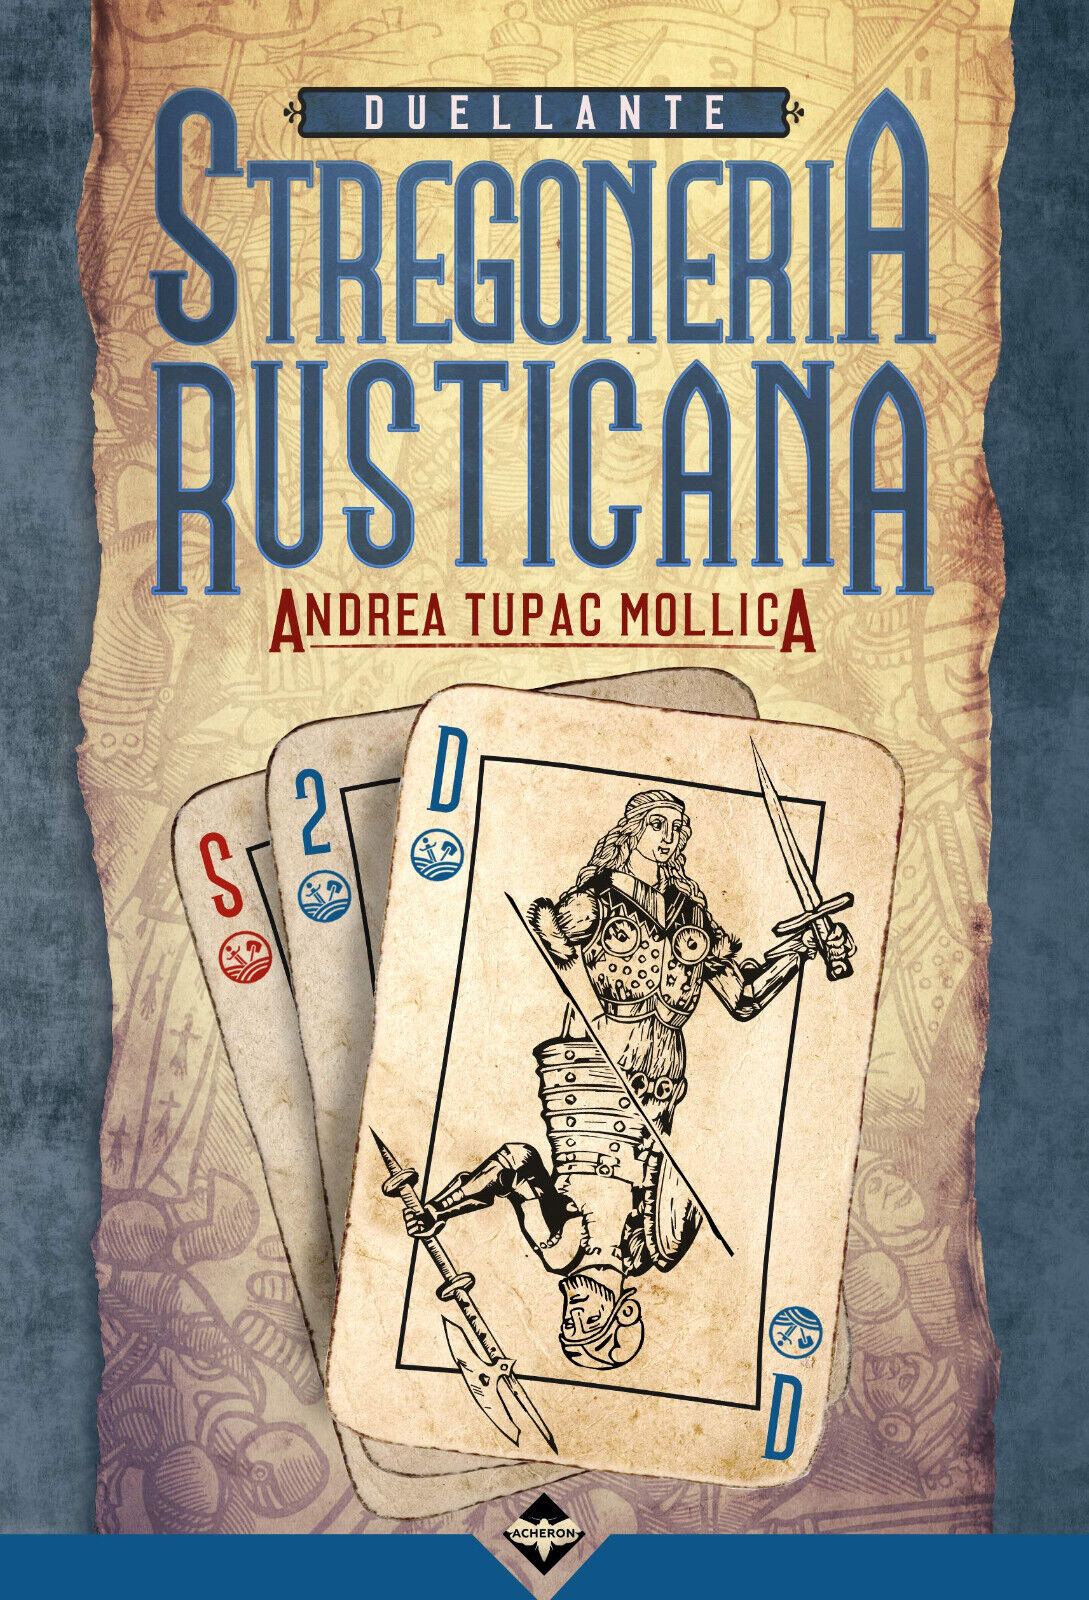 Duellante. Stregoneria rusticana! - Andrea Tupac Mollica - Acheron Books, 2019